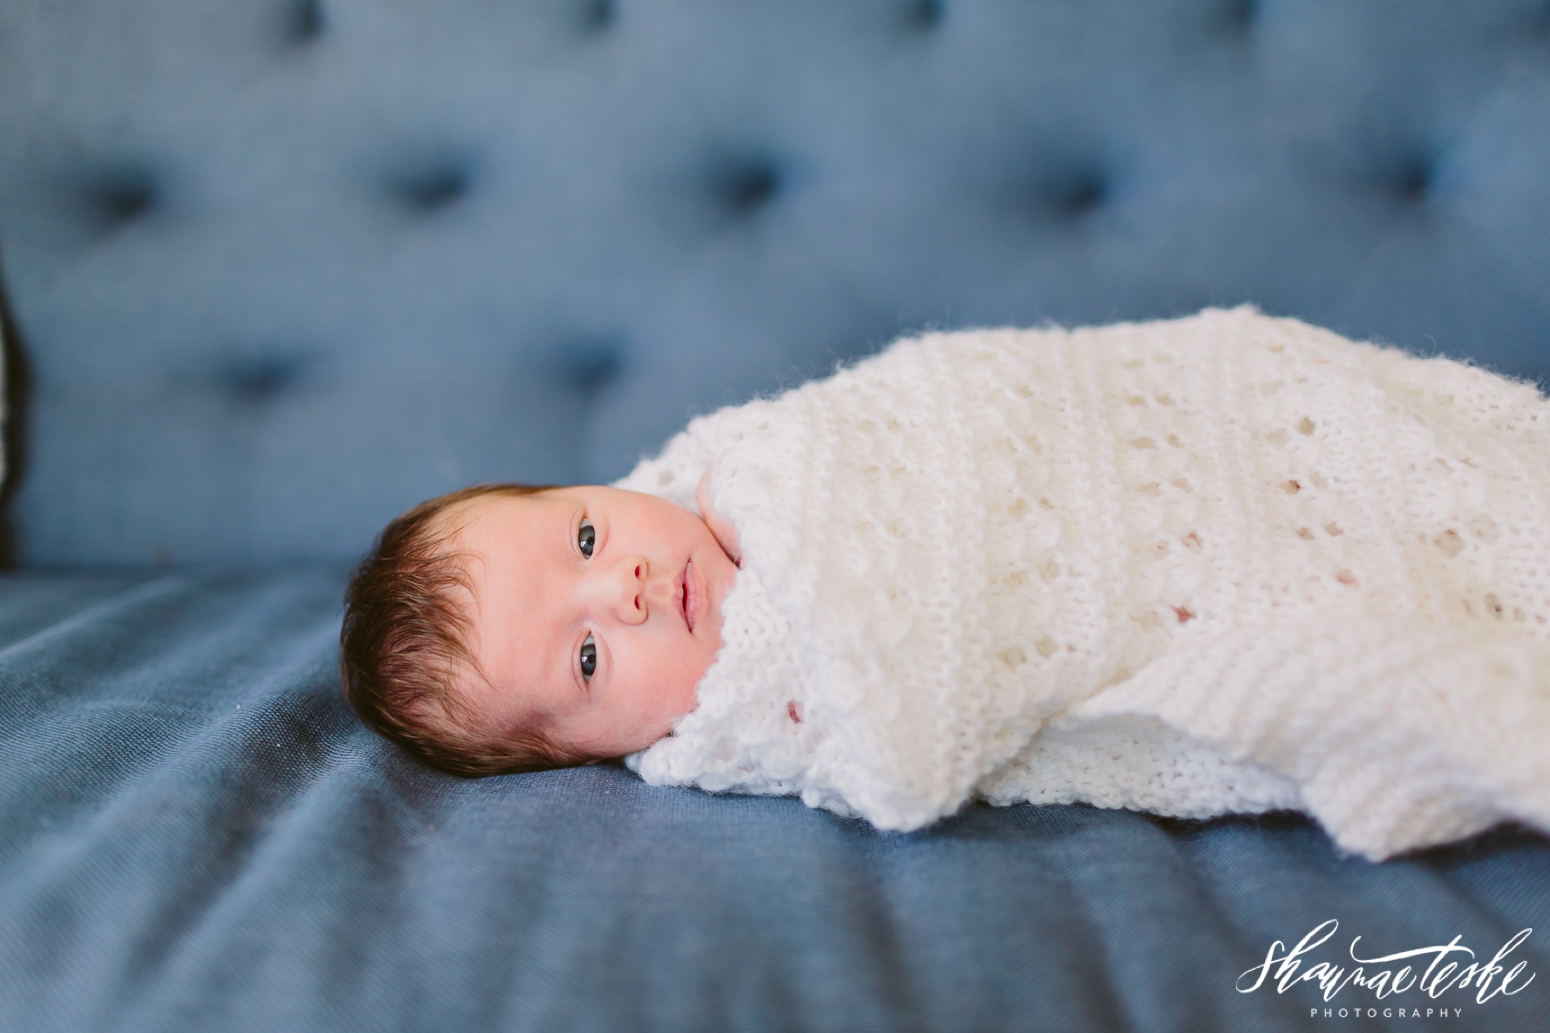 shaunae_teske_wisconsin_photographer_at-home-newborn-session-wisconsin-kathryn-150